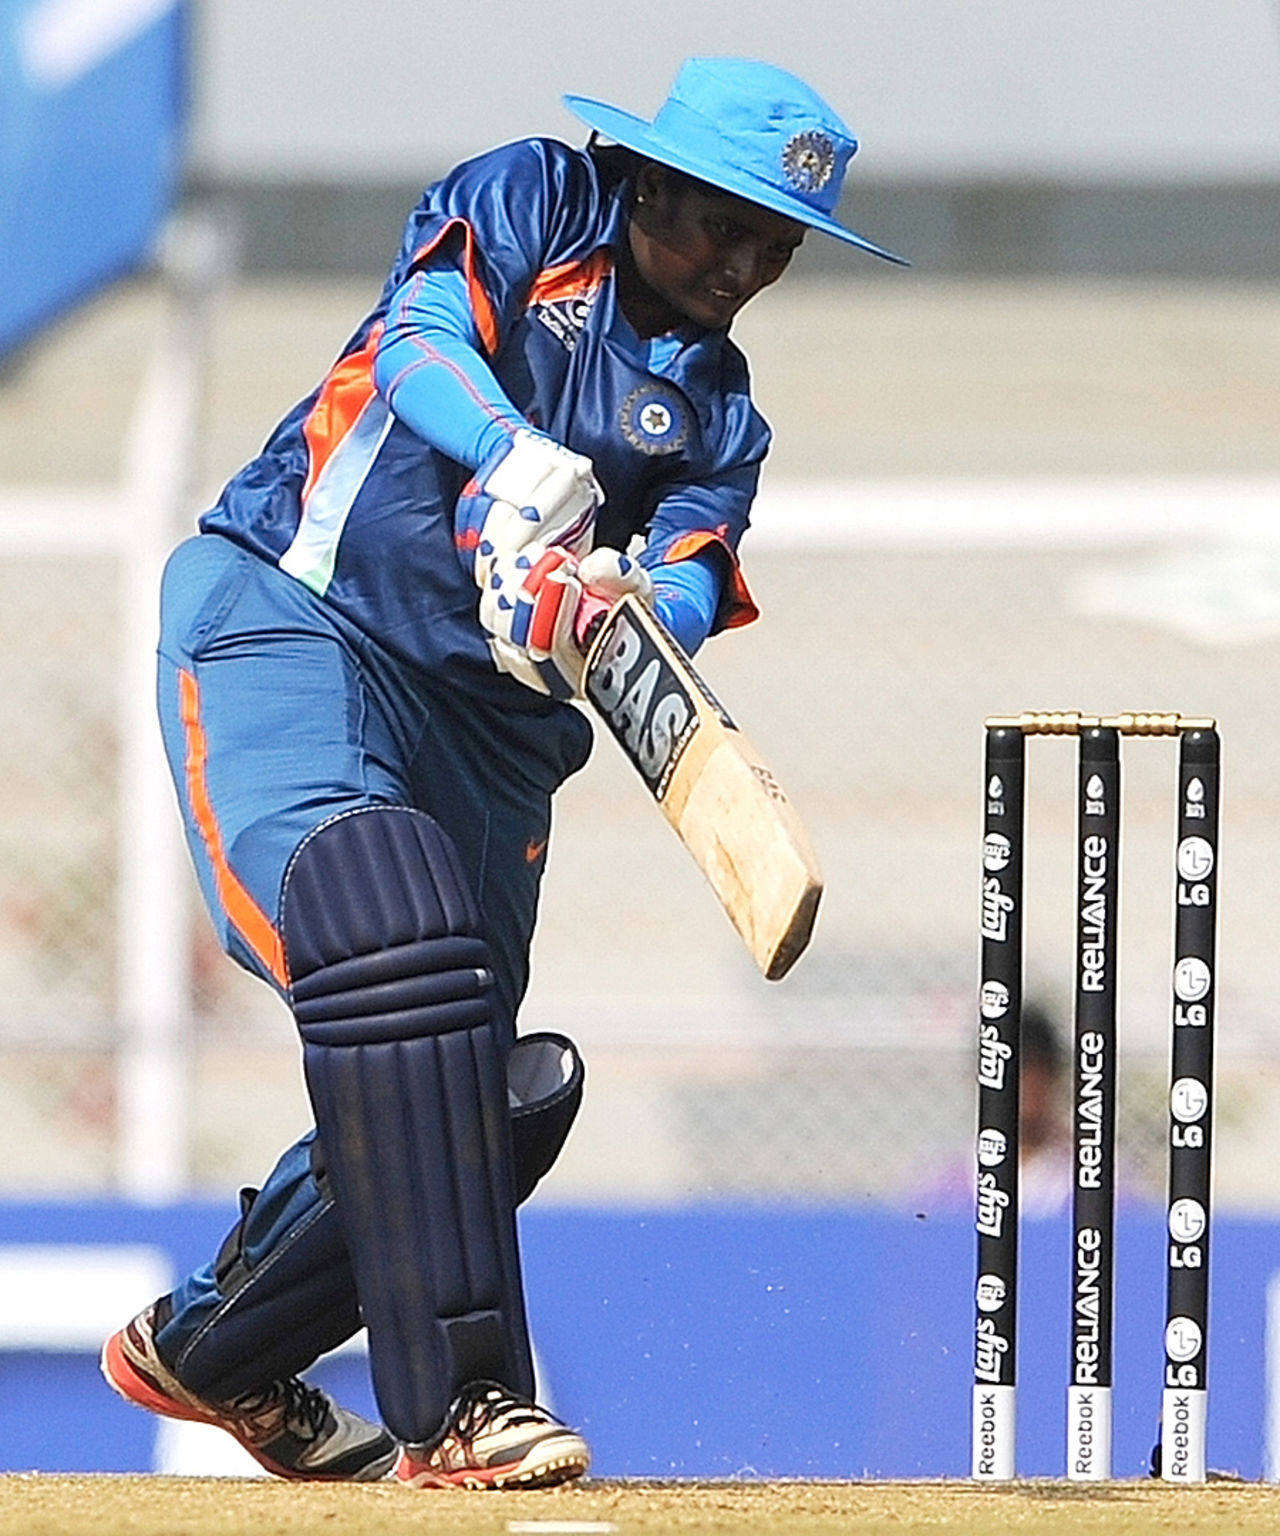 Opener Thirush Kamini played steadily to provide India a safe start, India v West Indies, Women's World Cup 2013, Mumbai, January 31, 2013